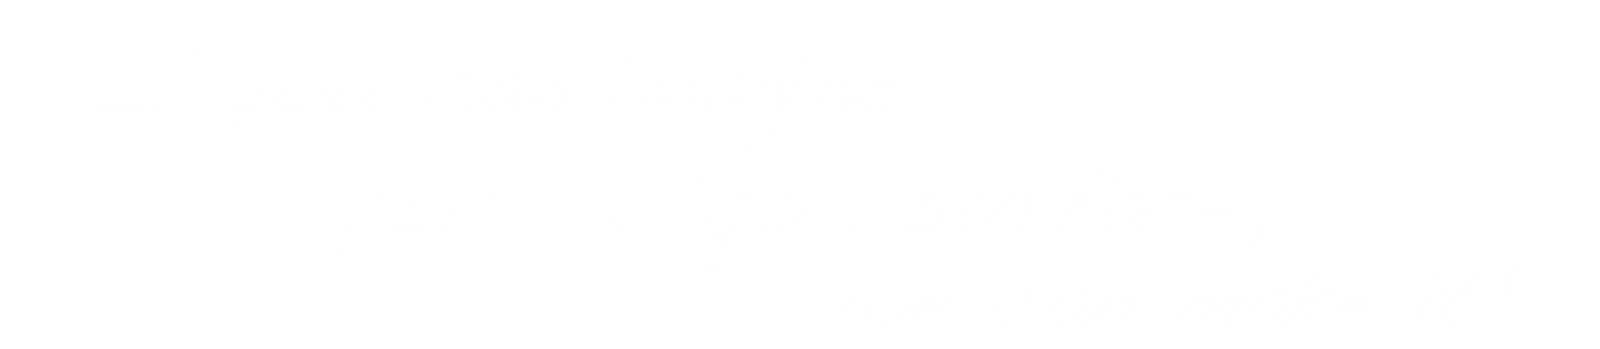 slogan-mobile